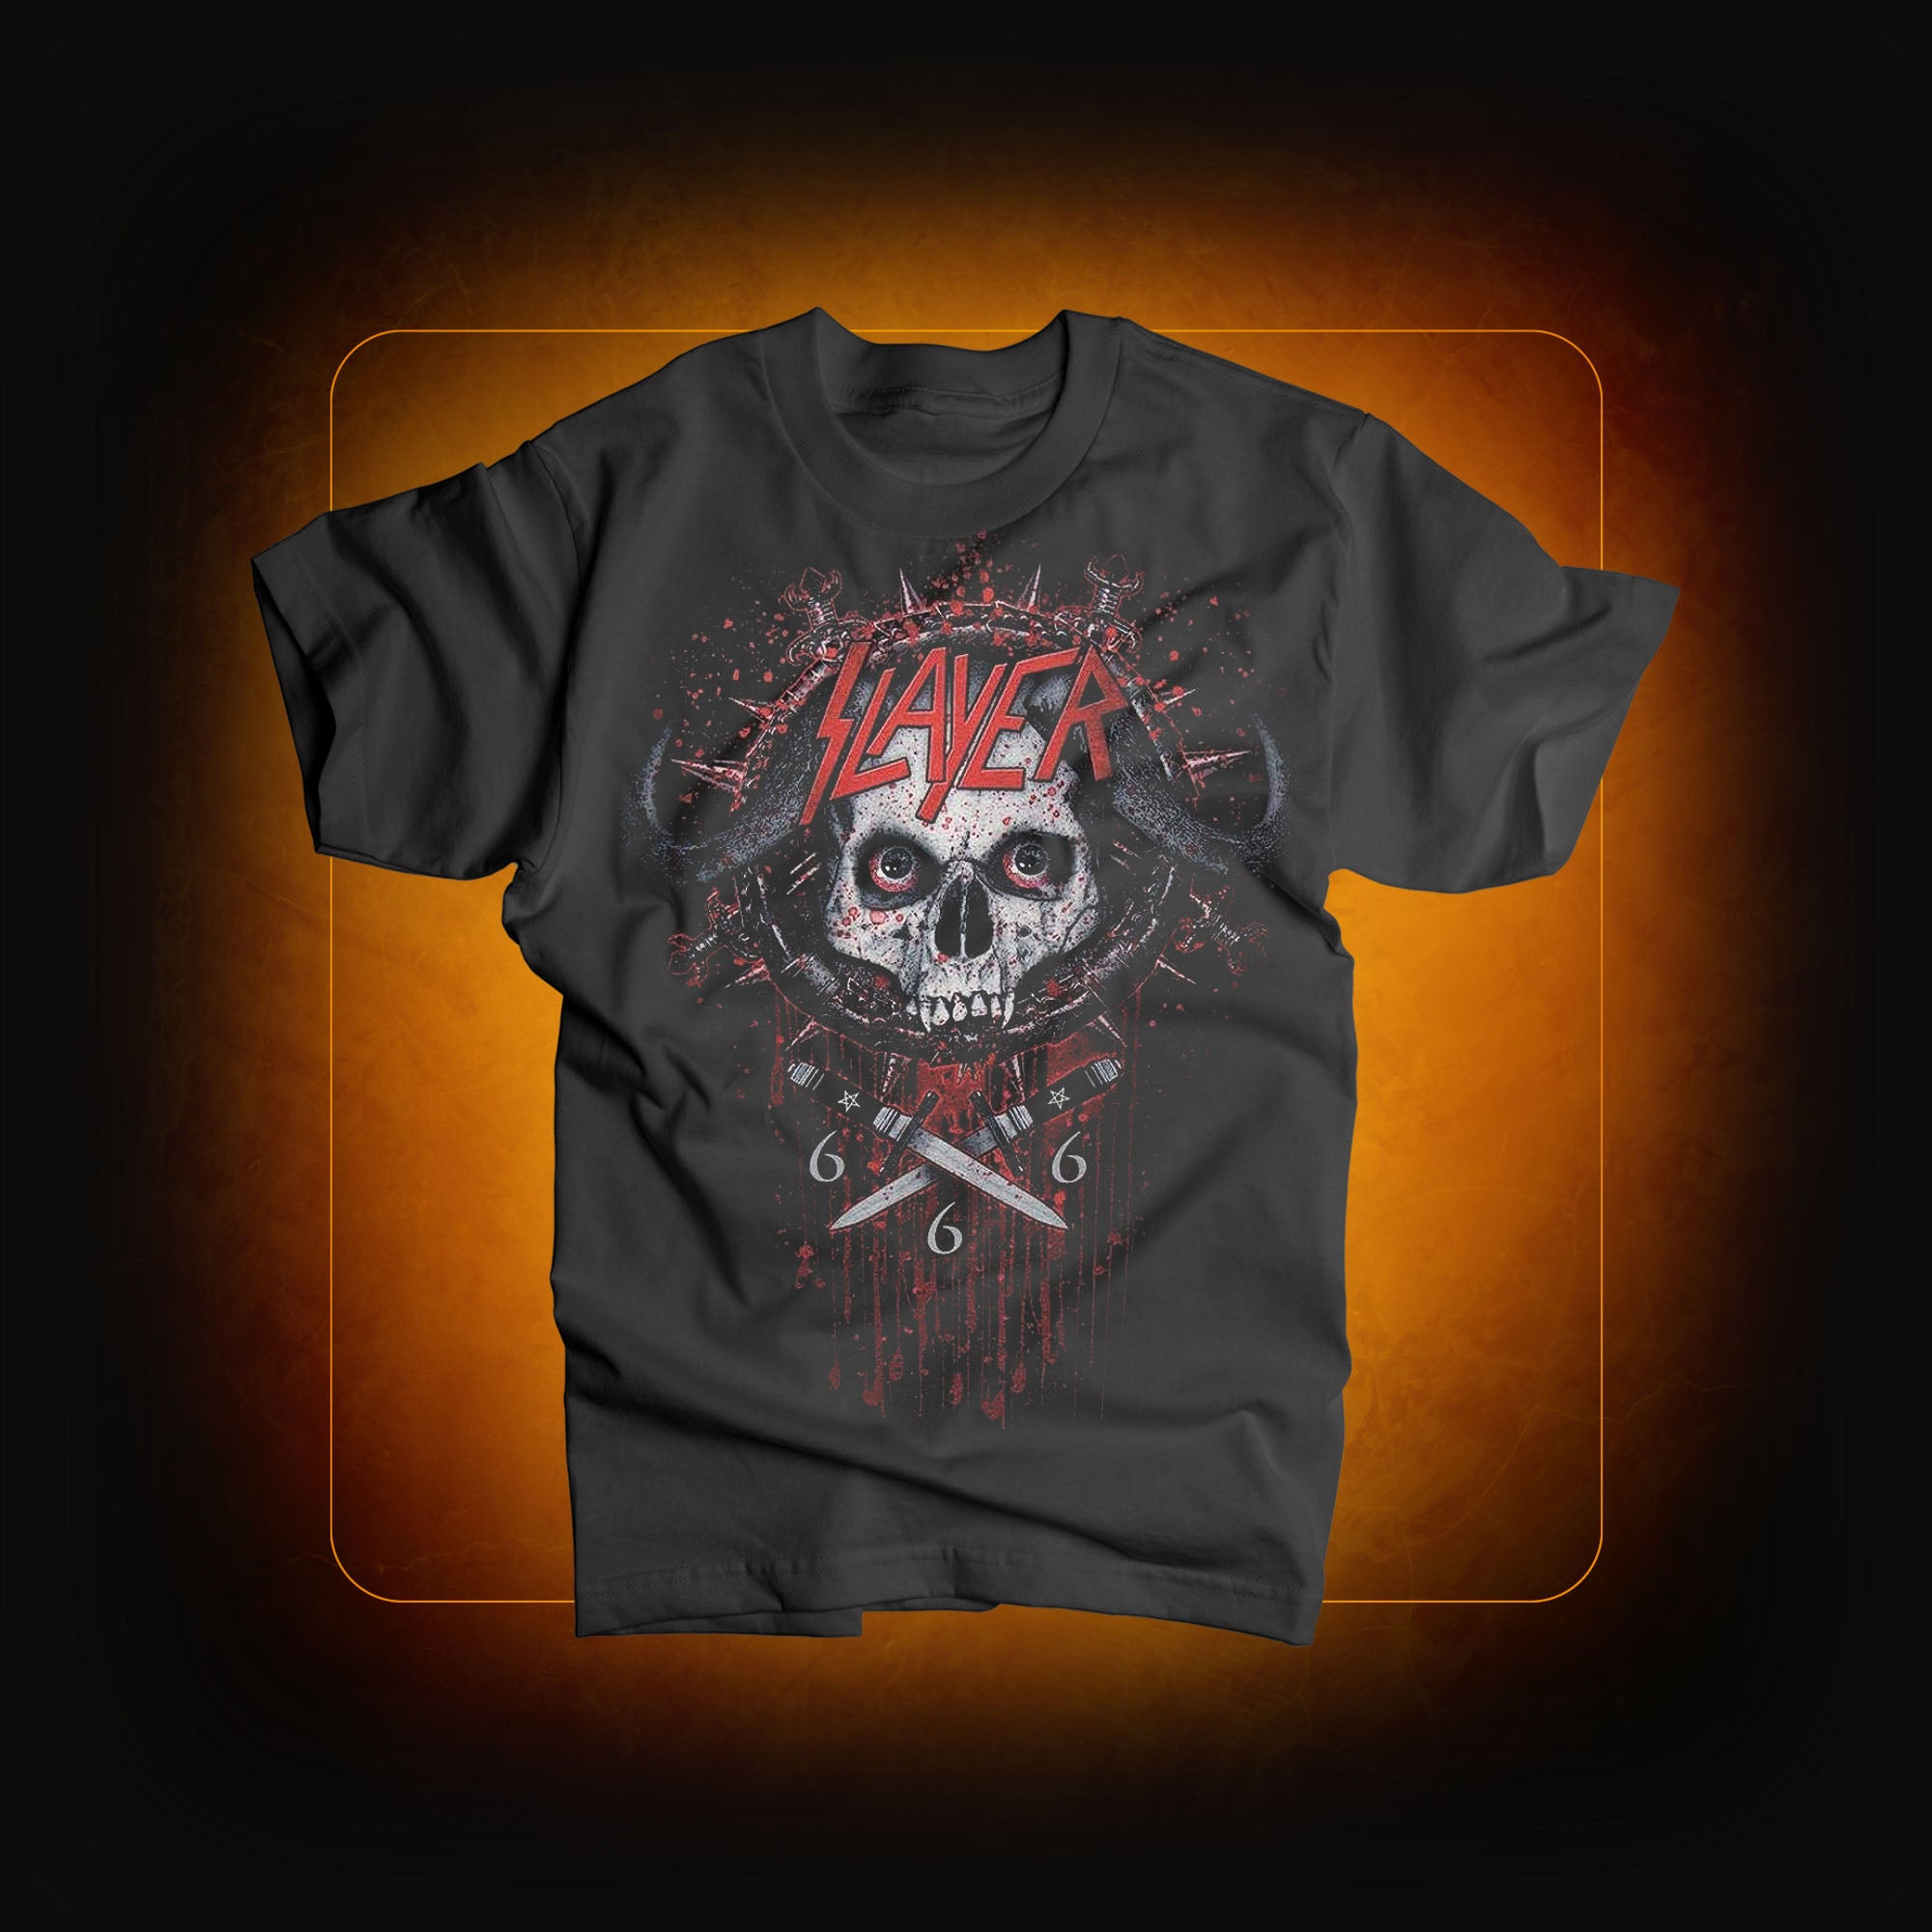 Demonic crest t-shirt - Slayer